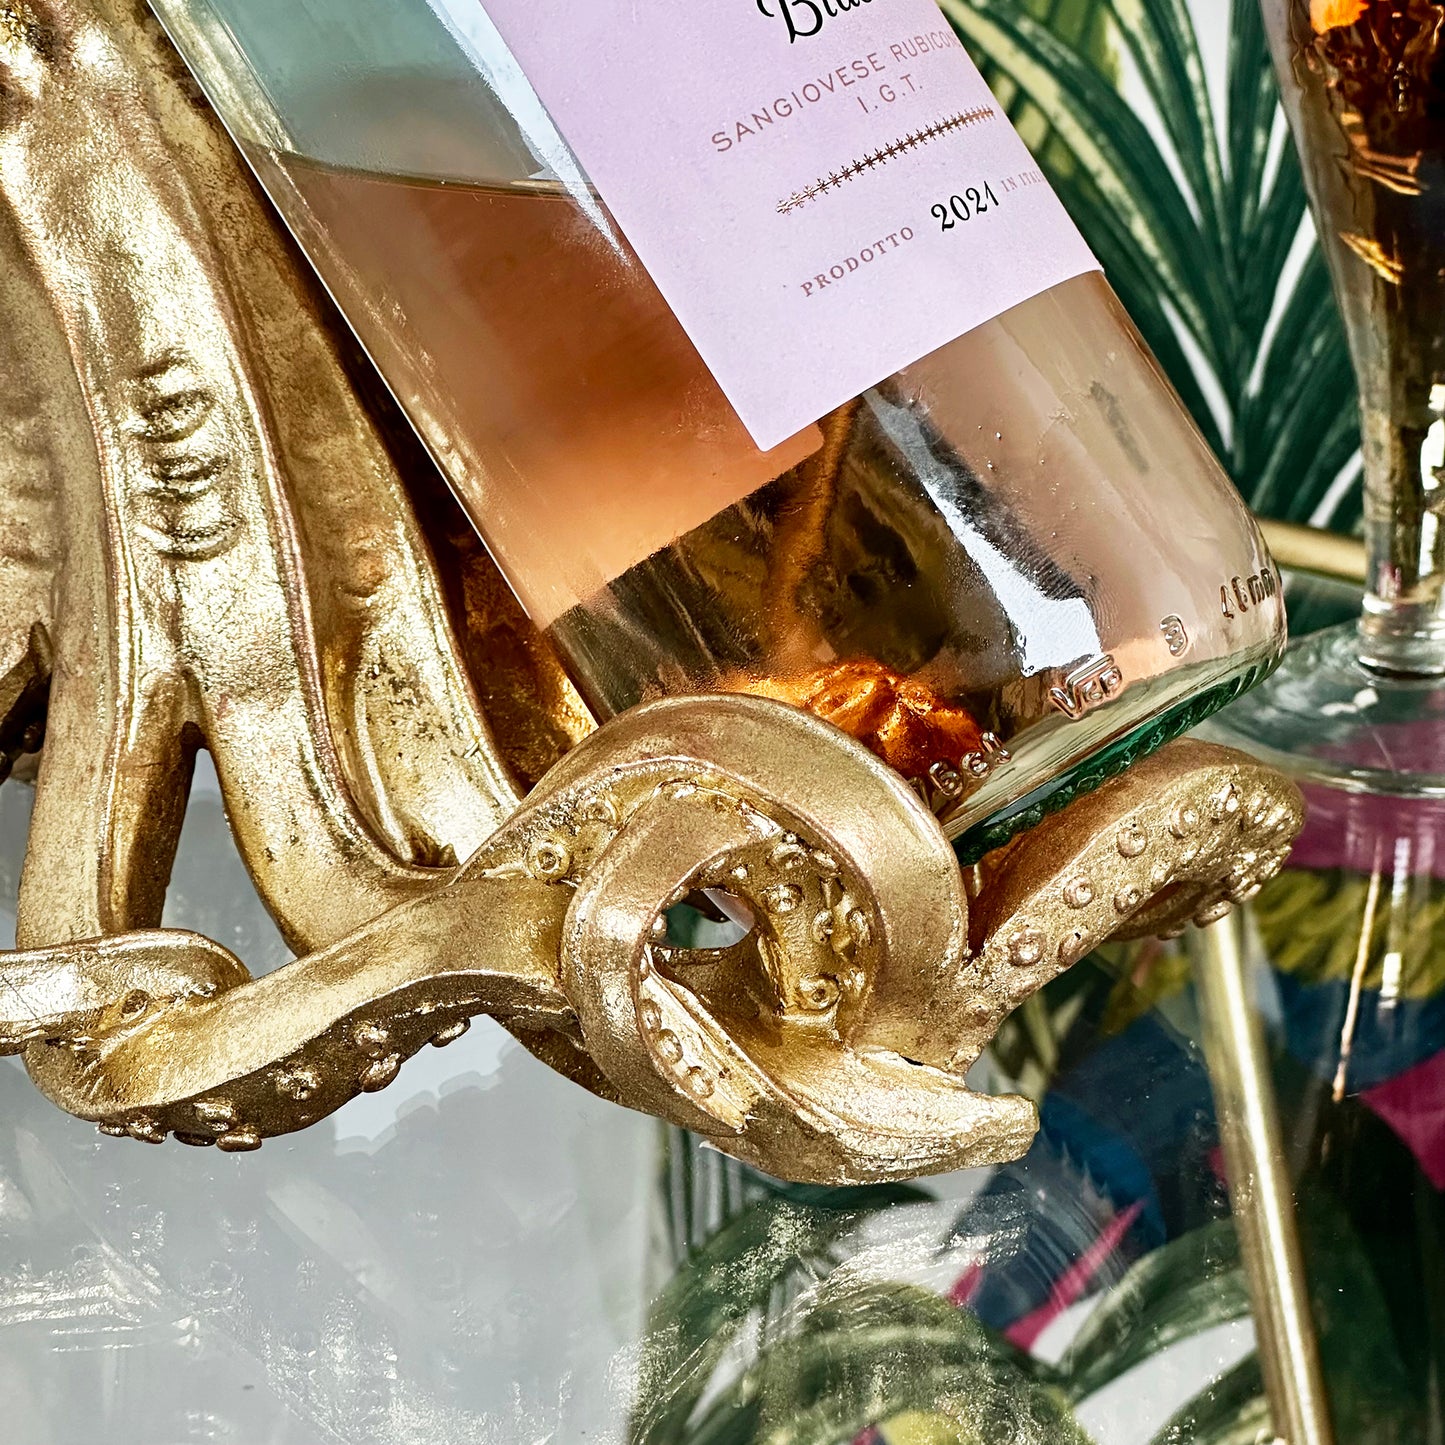 Gold Ollie Octopus Wine Bottle Holder